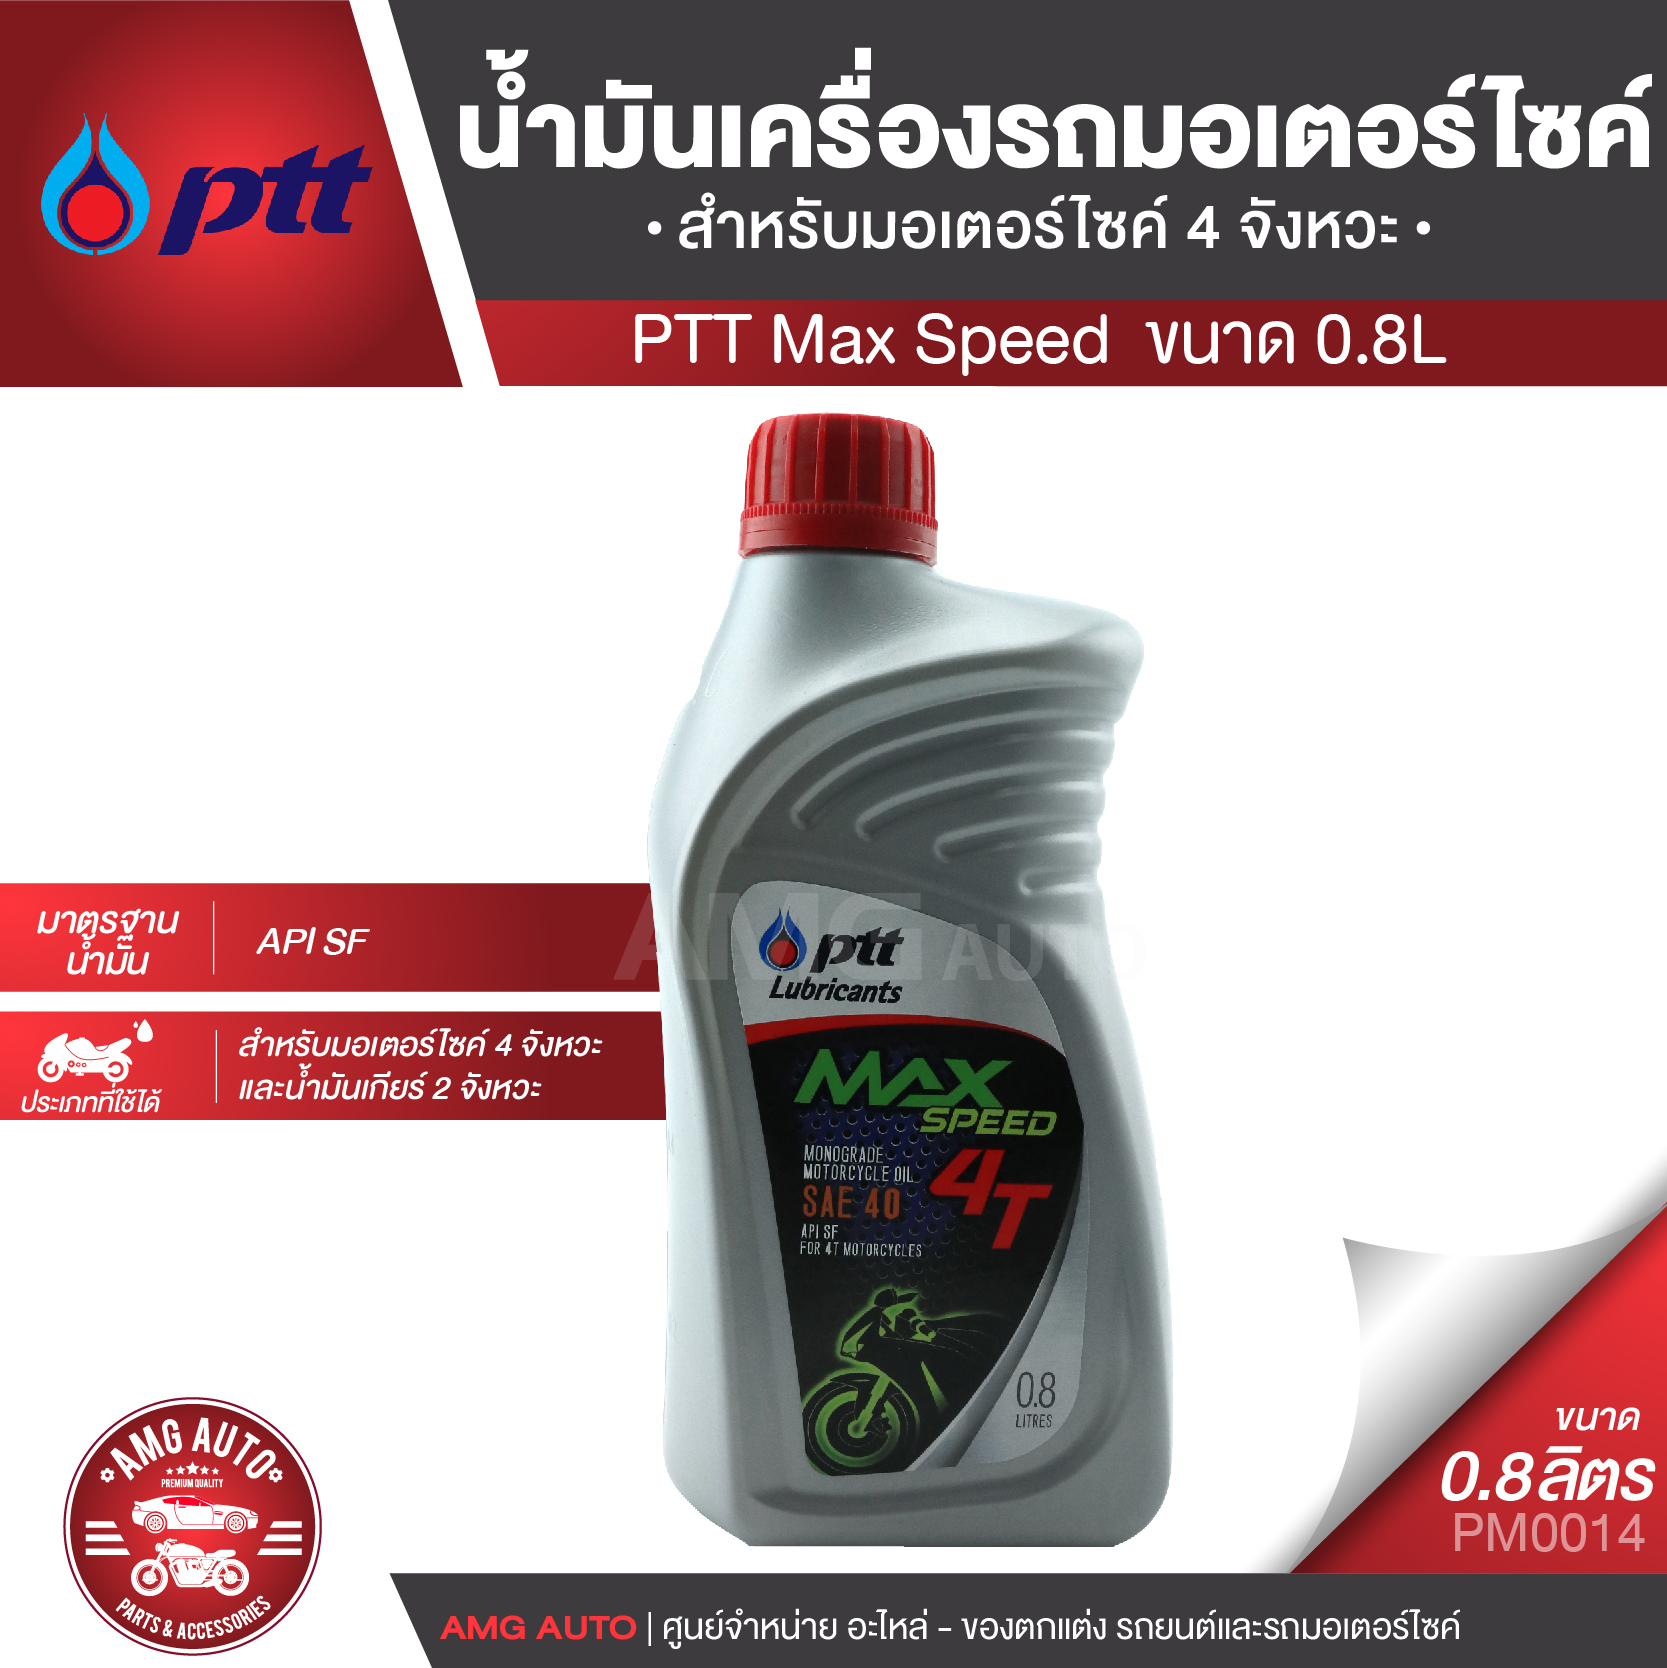 PTT 4T Max Speed Sea 40 ขนาด 0.8 ลิตร น้ำมันเครื่องรถมอเตอร์ไซค์ 4 จังหวะ น้ำมันเครื่อง ยี่ห้อ พีทีที PM0014